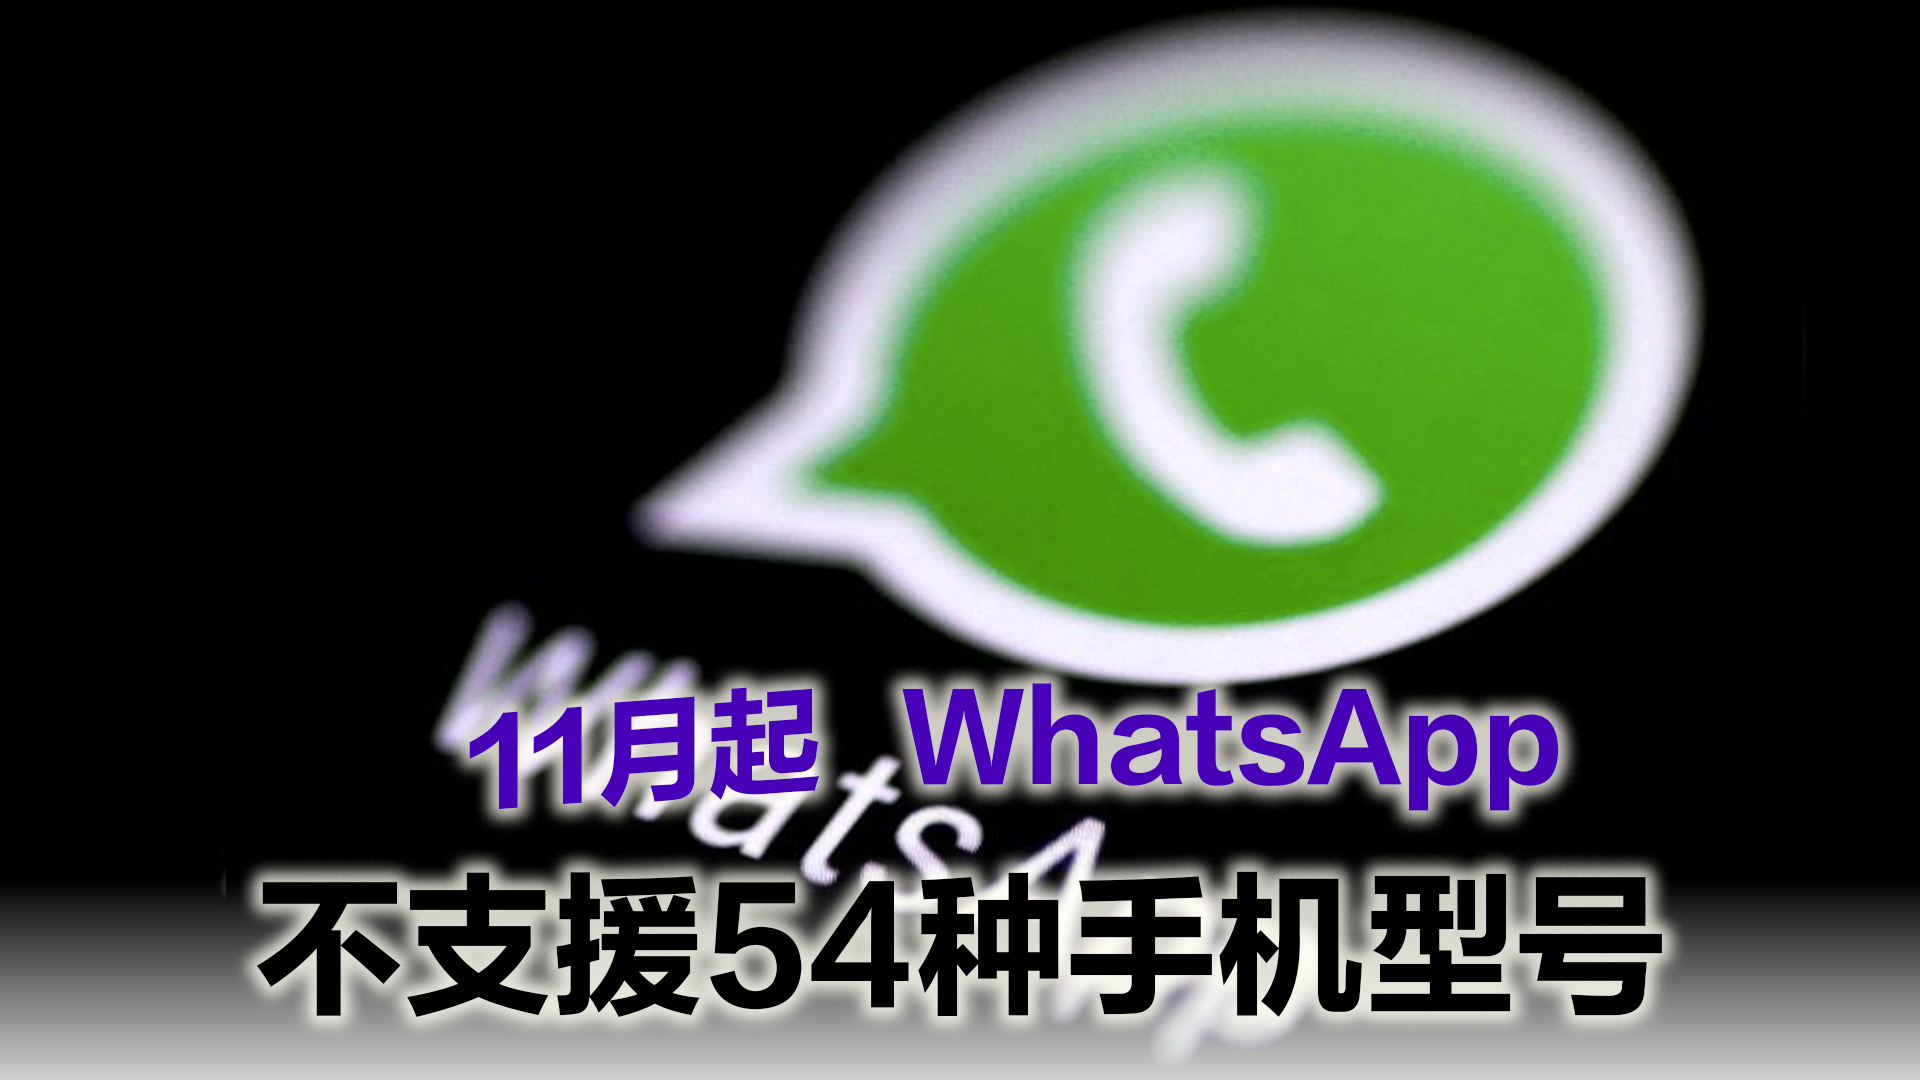 whatsapp不能關屏後自動彈出訊息 - Android Phone 軟件 - Android Phone - 電腦領域 HKEPC ...